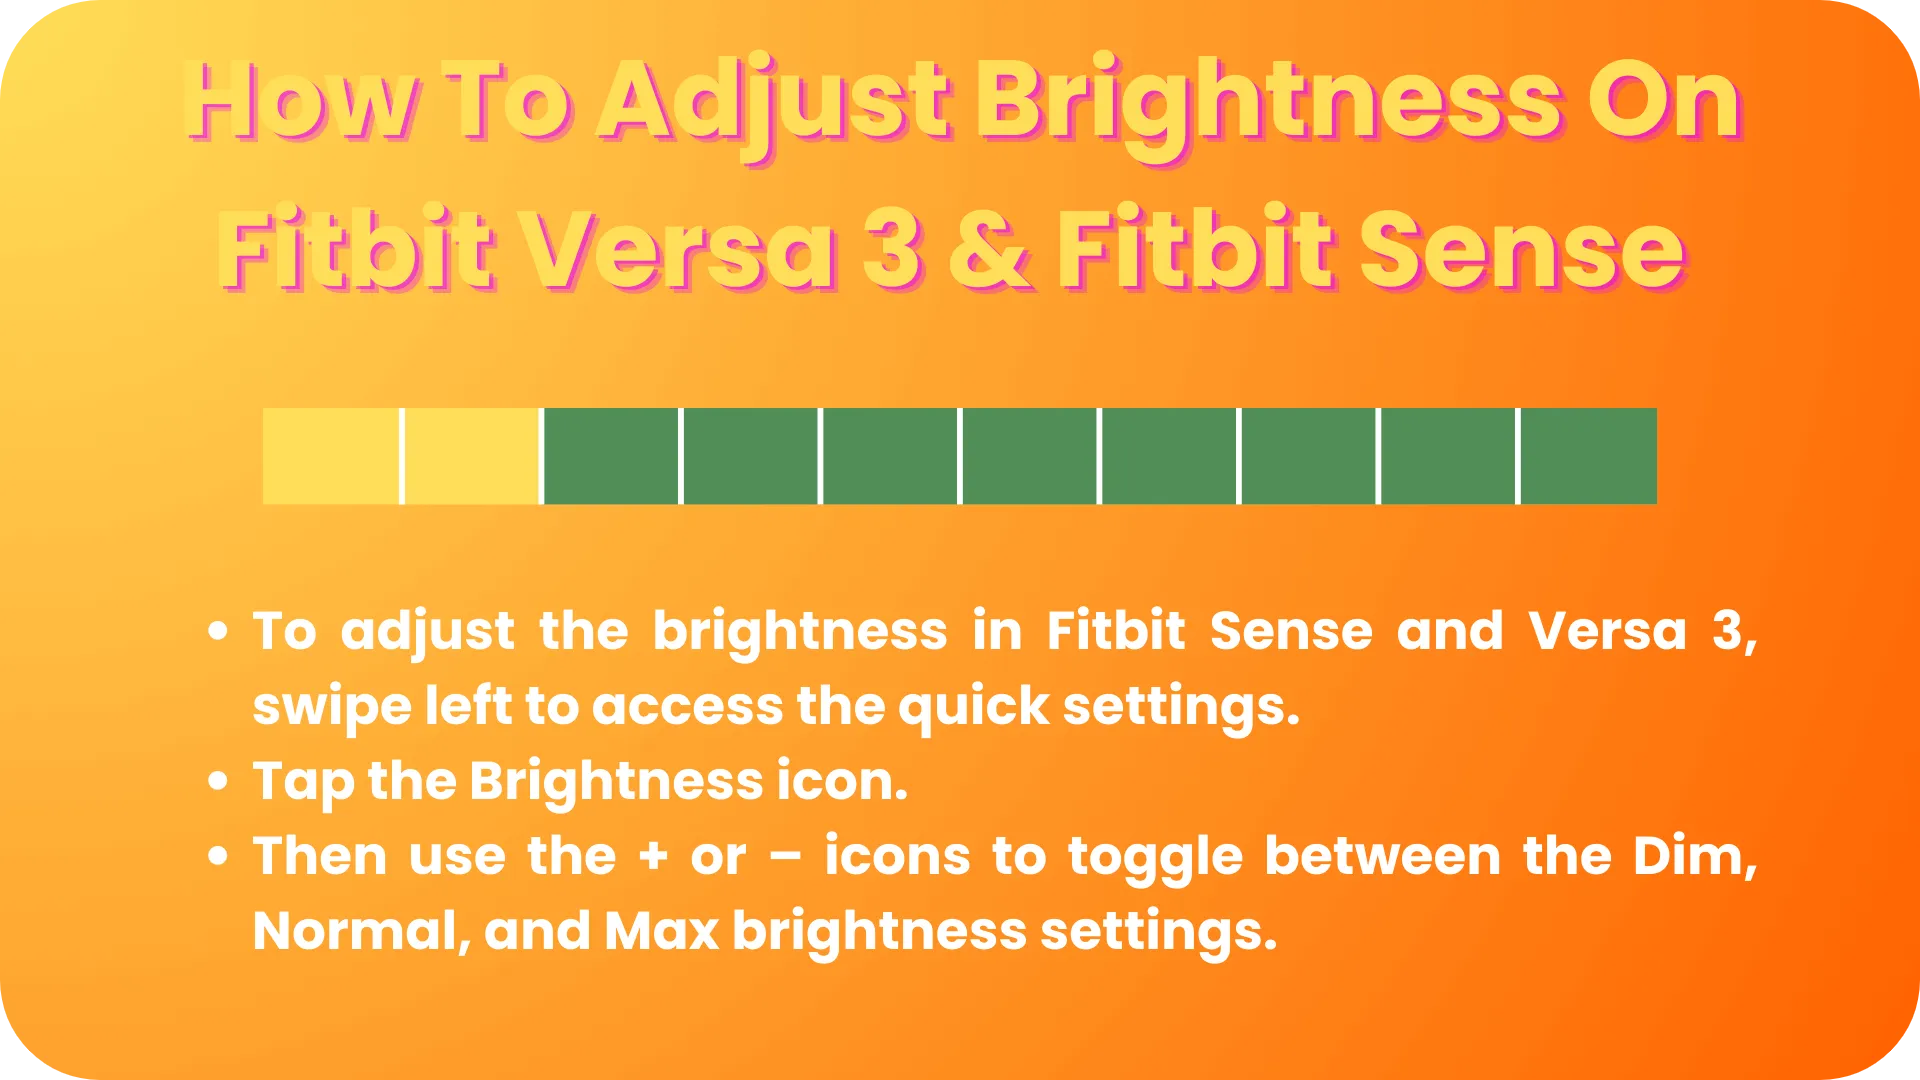 How To Adjust Brightness on Fitbit Versa 3 & Fitbit Sense